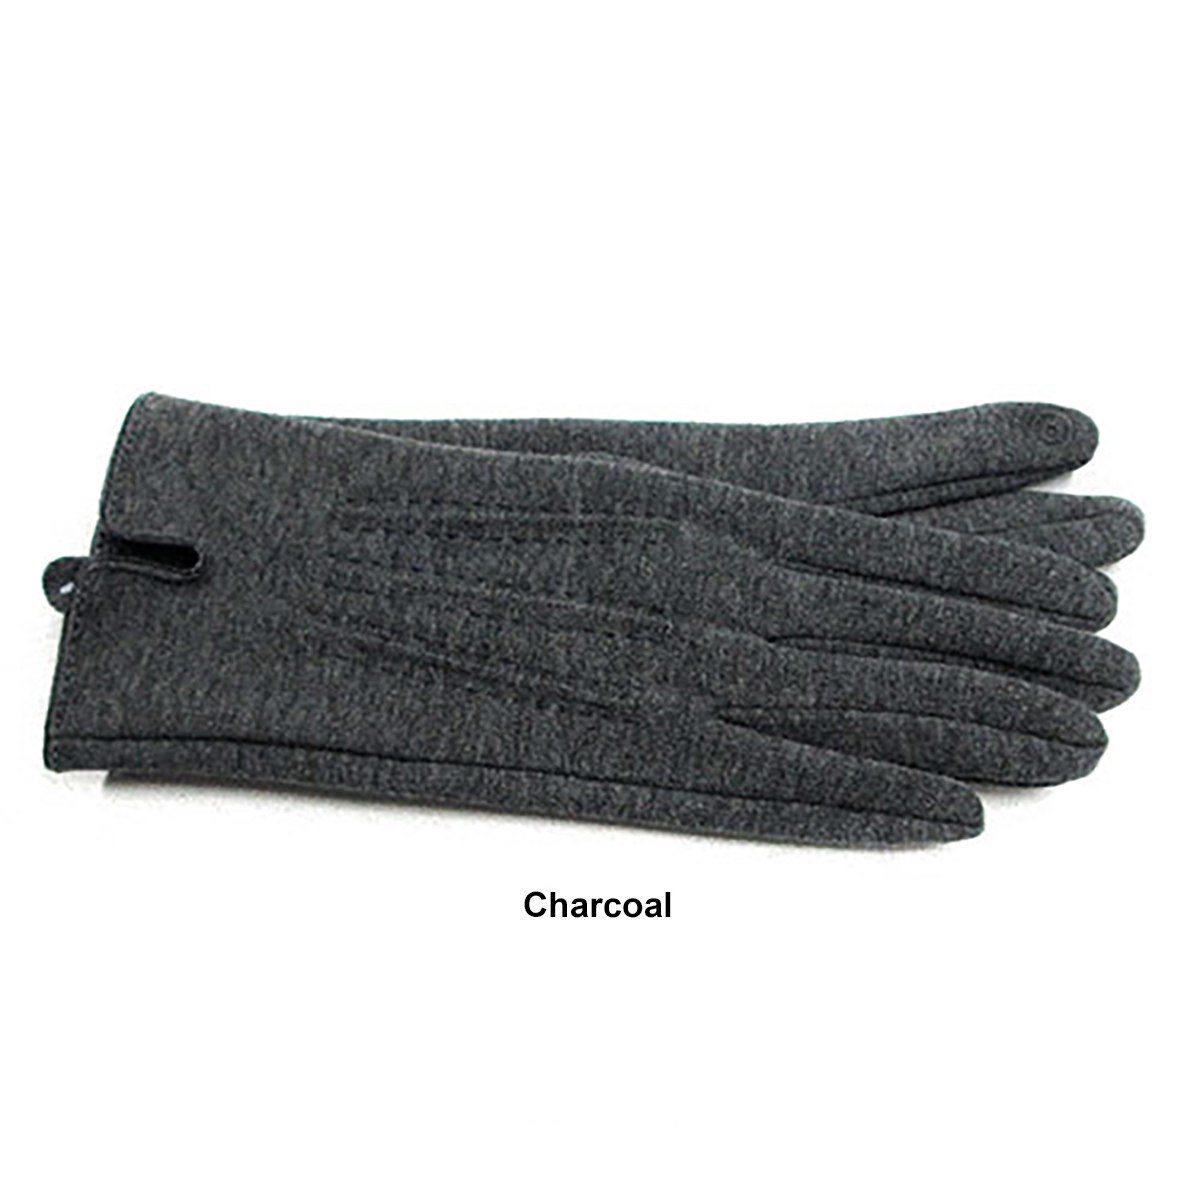 Womens Adrienne Vittadini Stretch Fleece Touchscreen Gloves